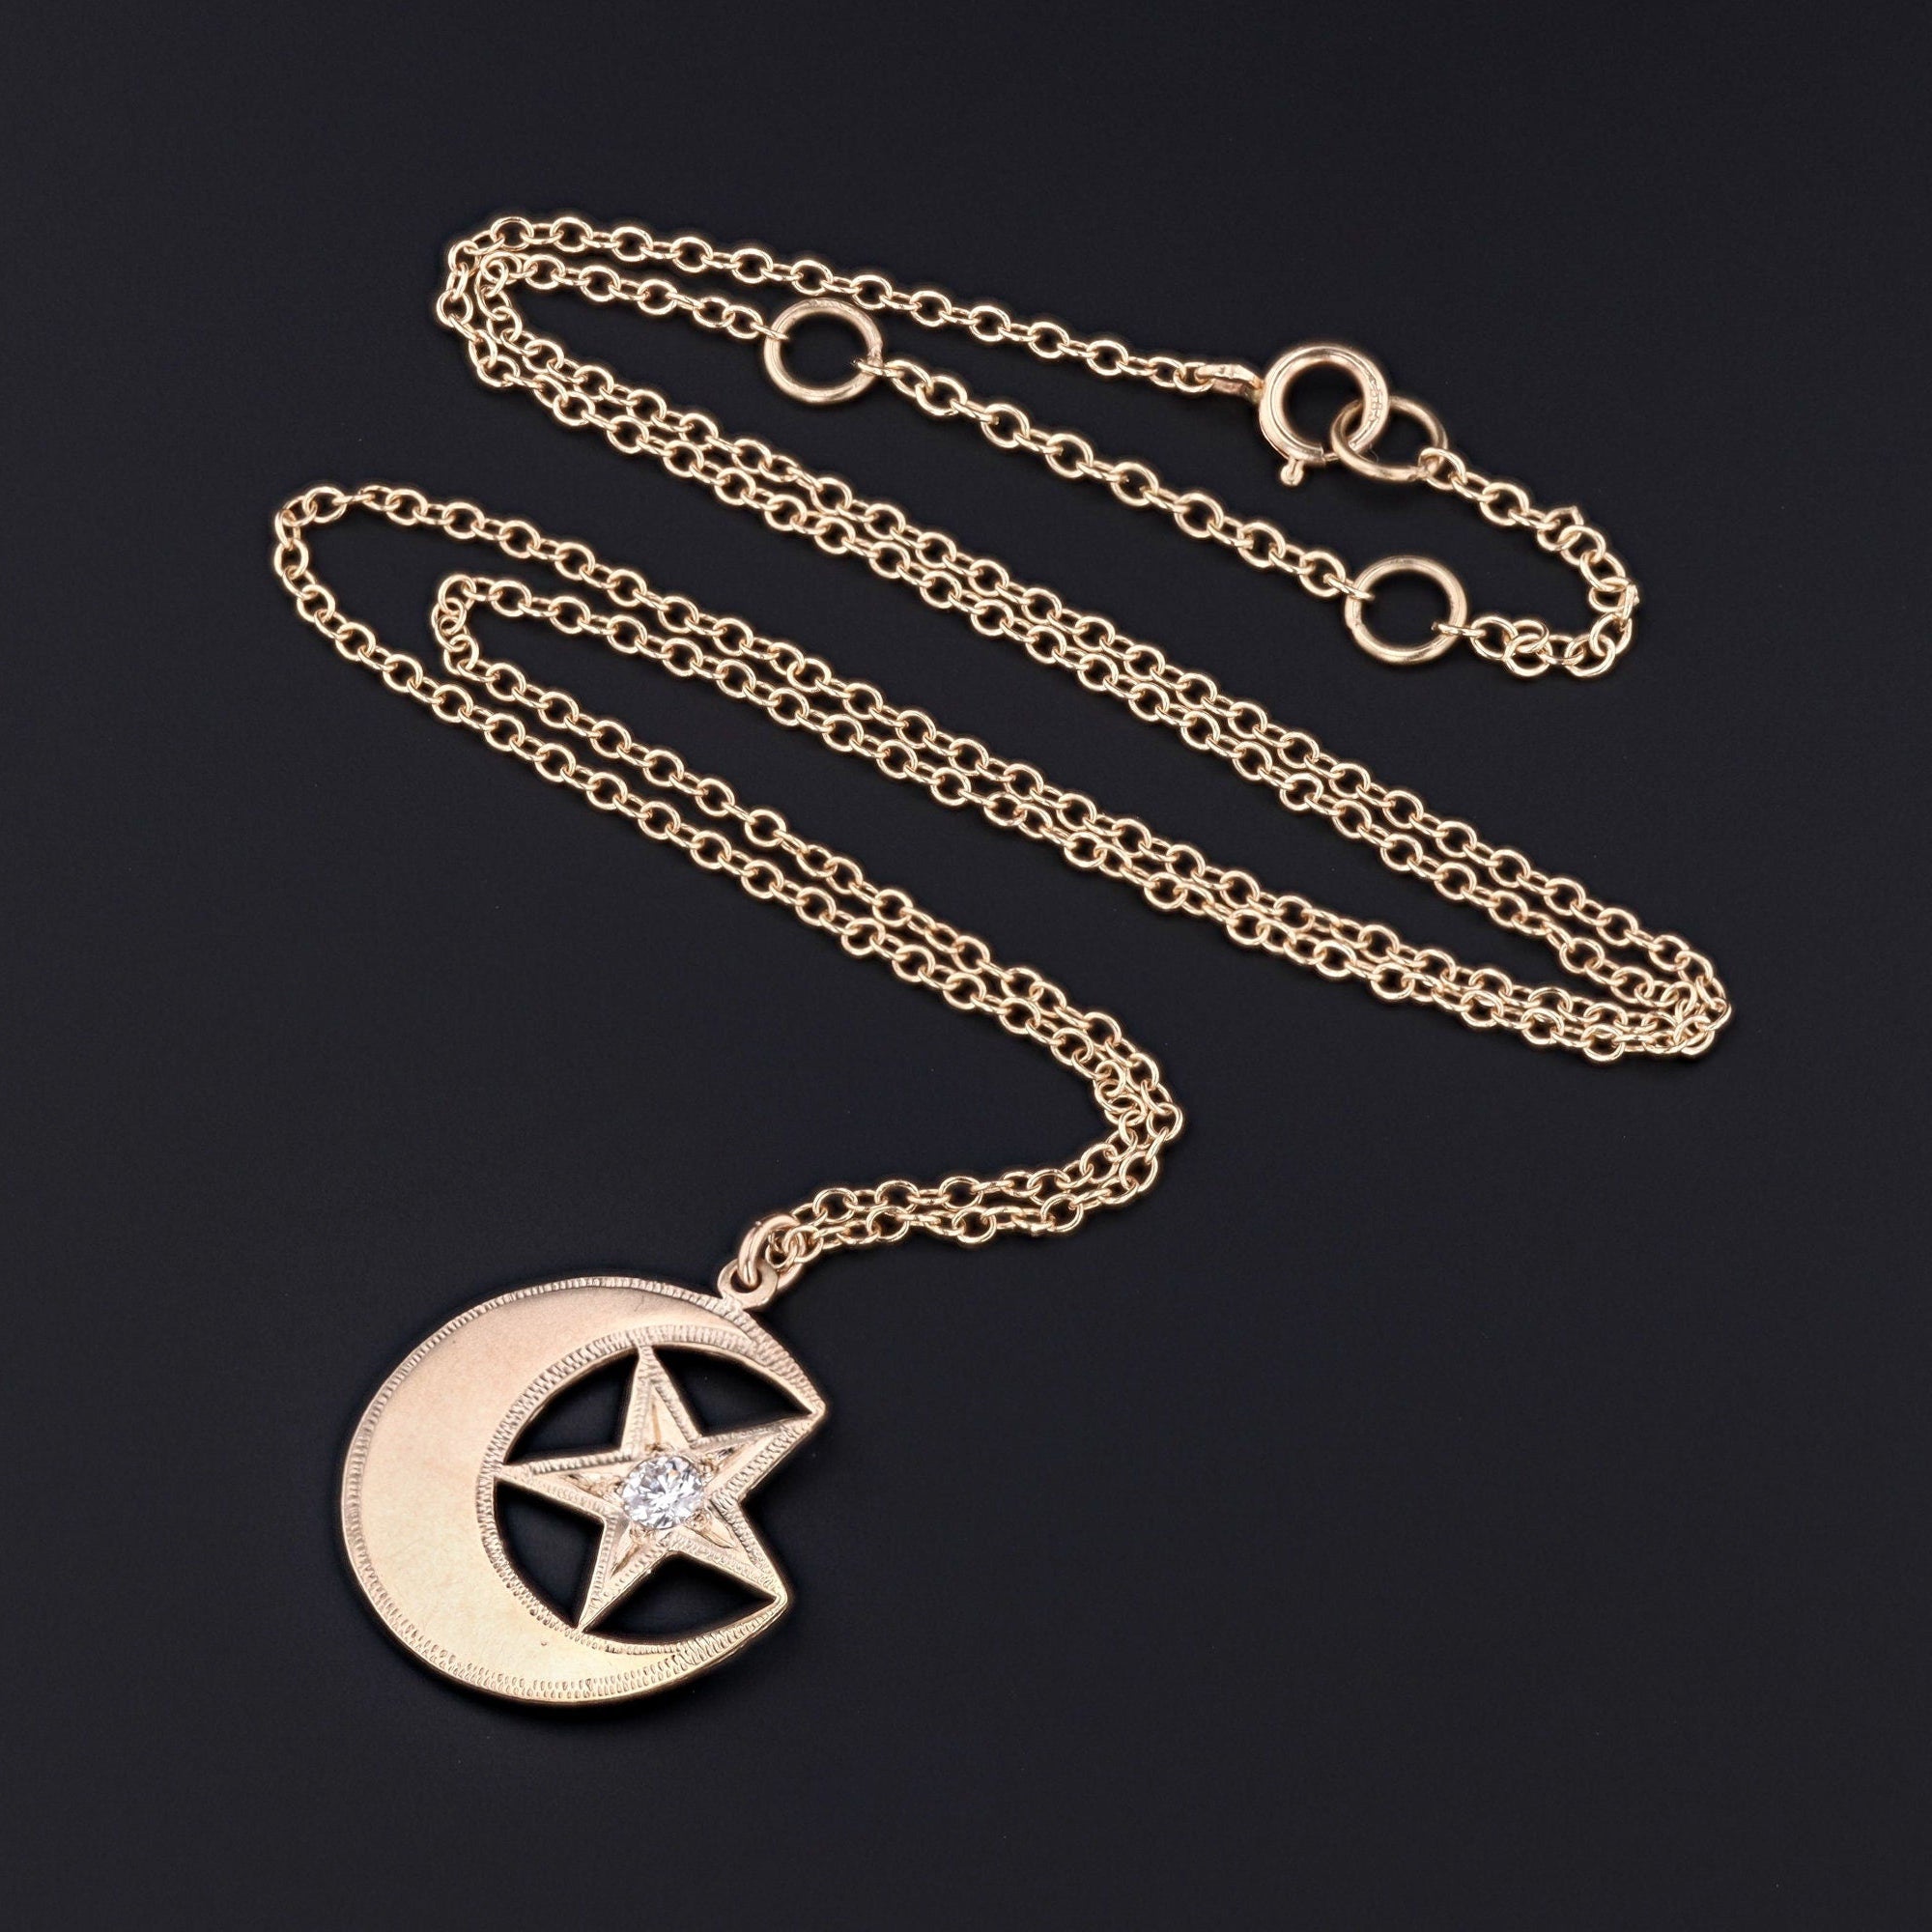 Crescent Moon Necklace | Antique Crescent & Star Necklace 